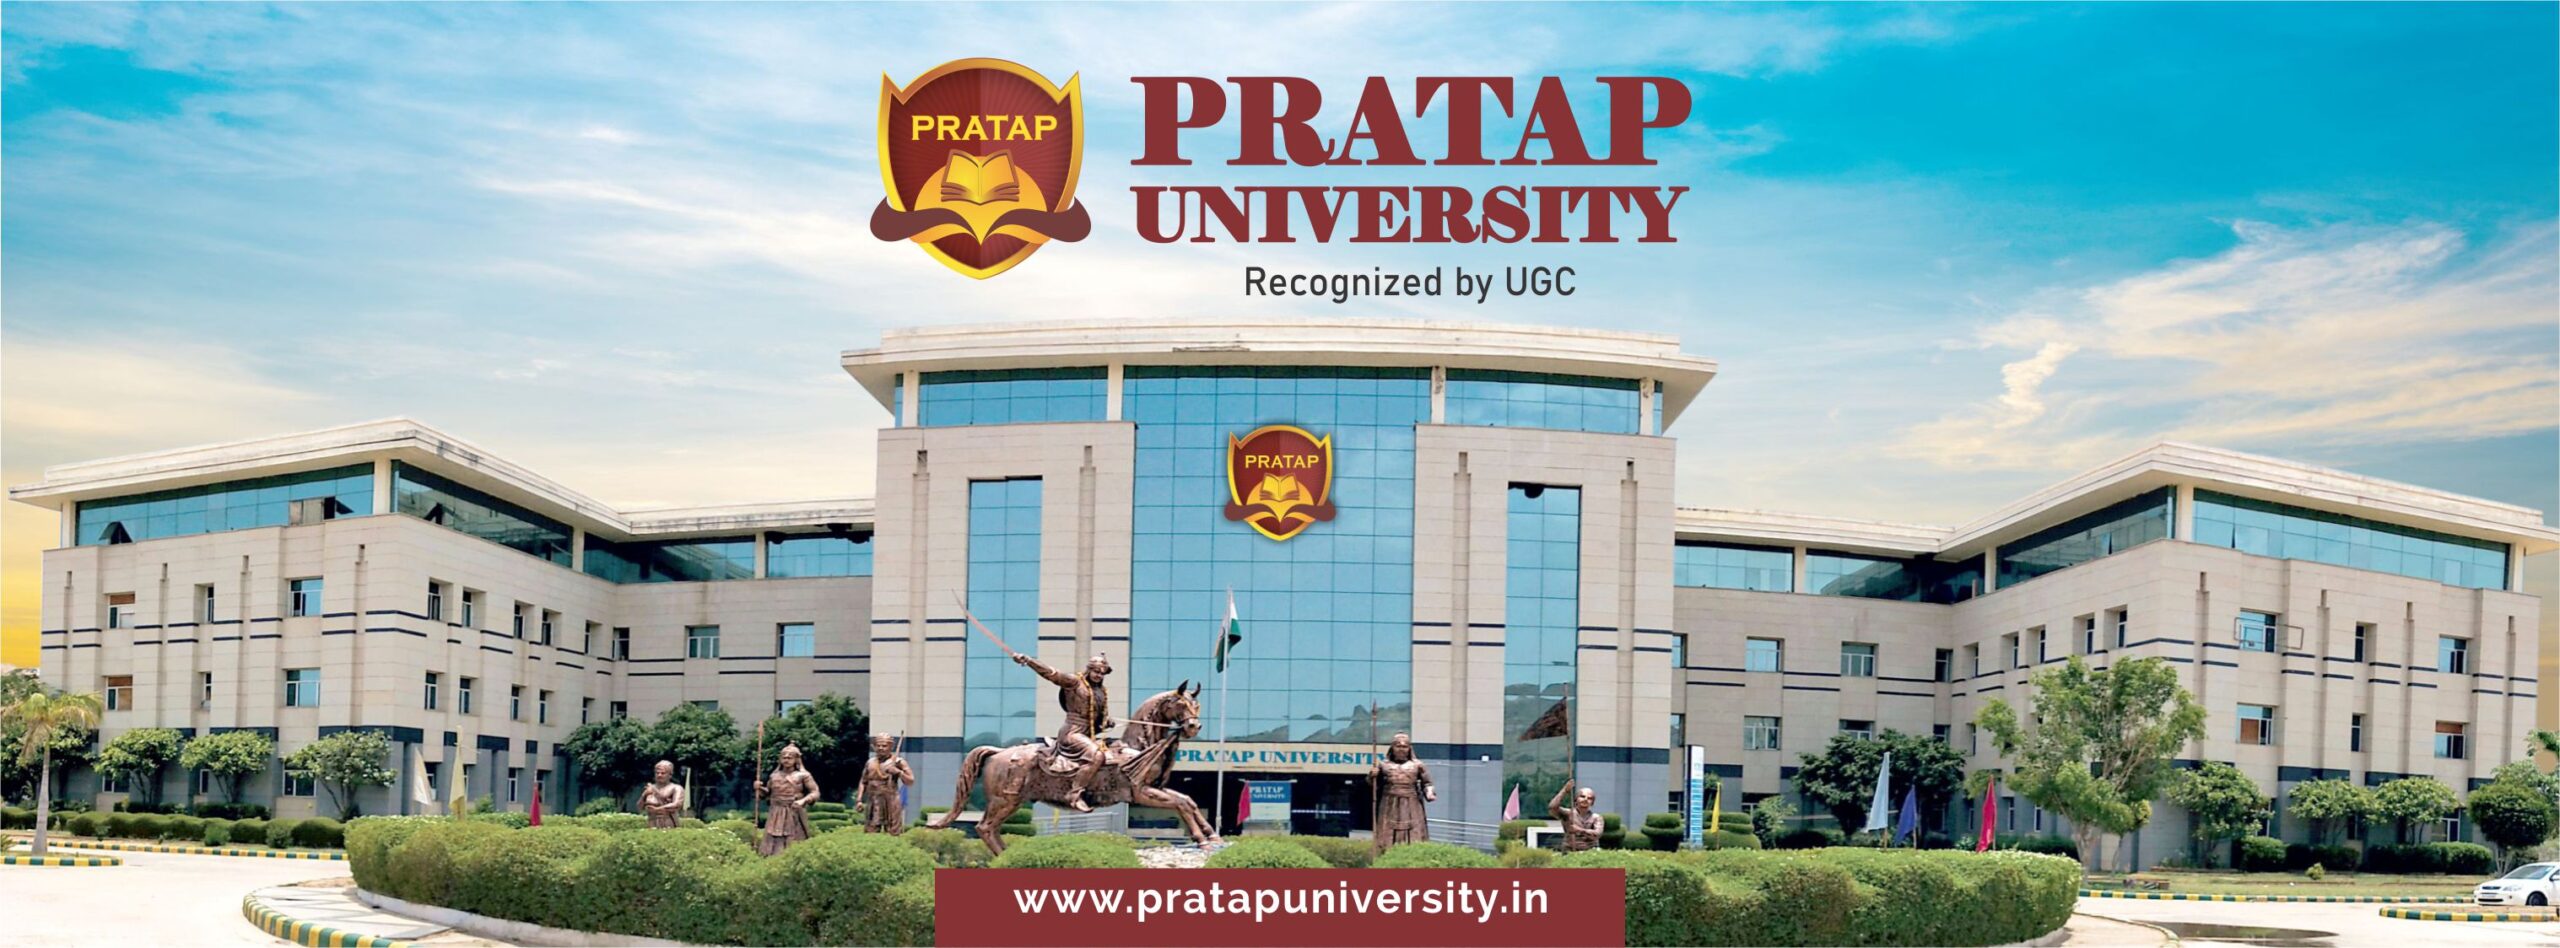 Pratap University Jaipur Hiring Faculty Posts for Multiple Departments